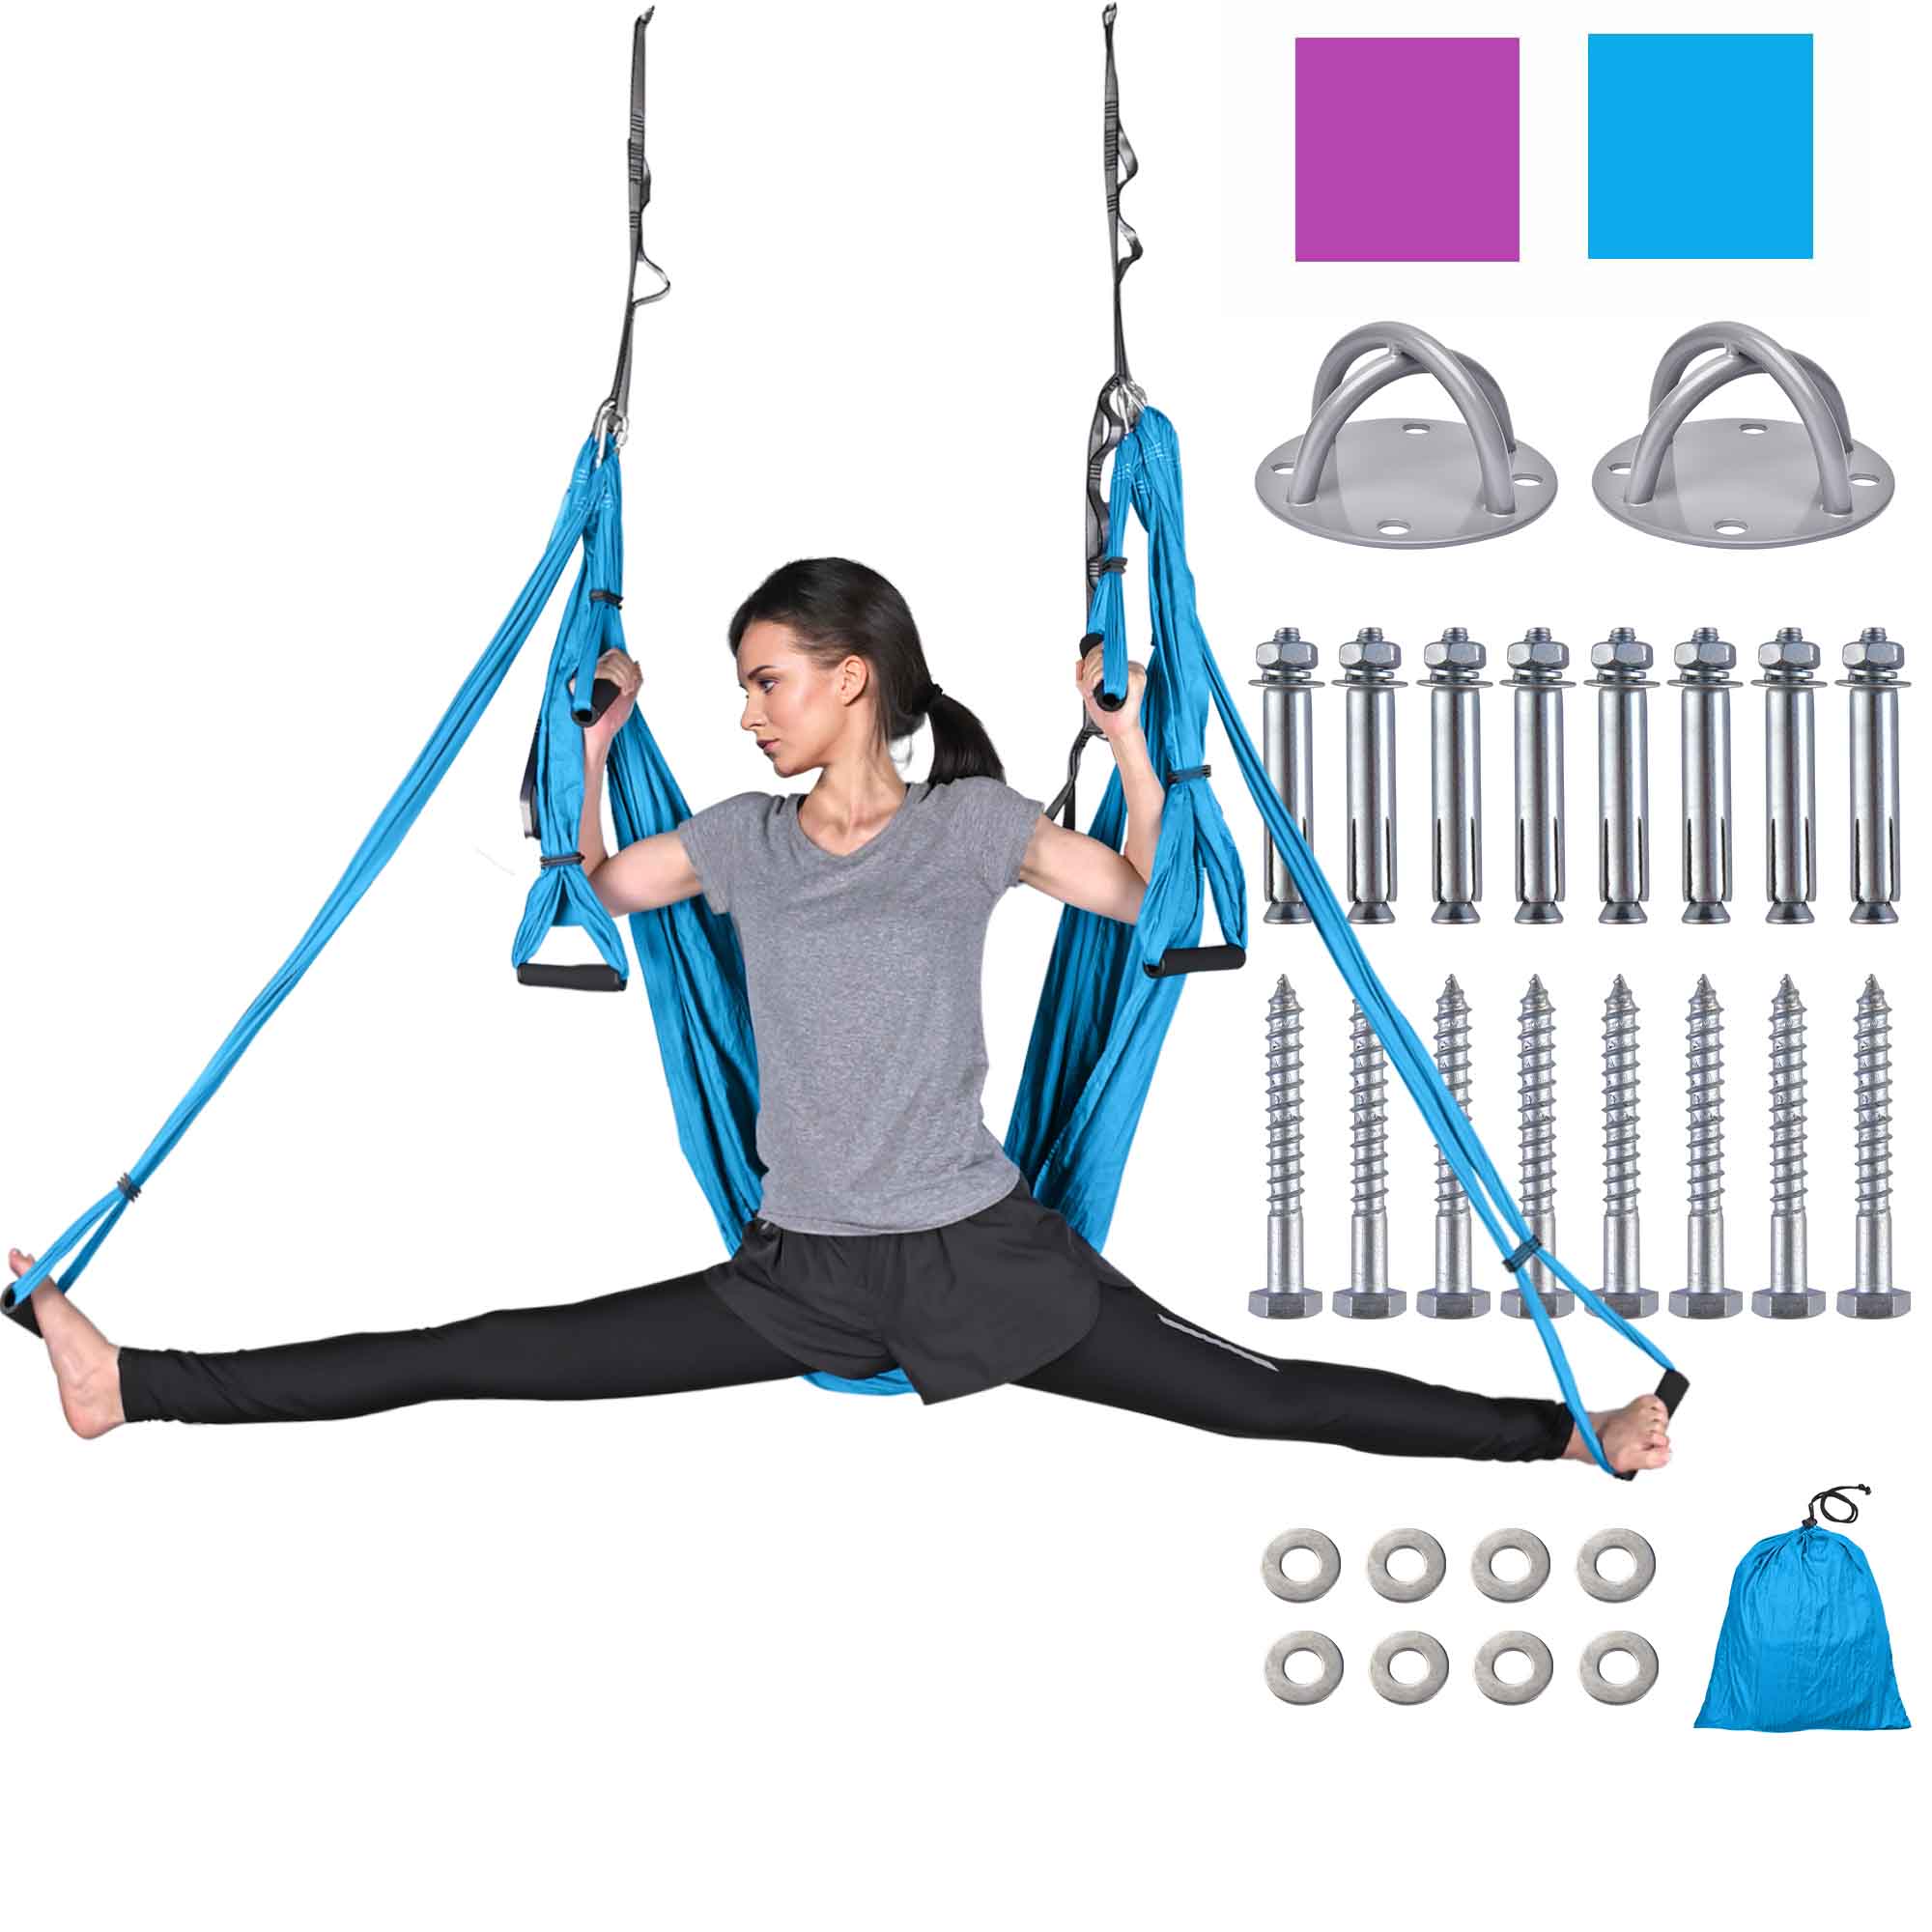 Yescom Yoga Swing Aerial Yoga Inversion Sling with Ceiling Hooks Image